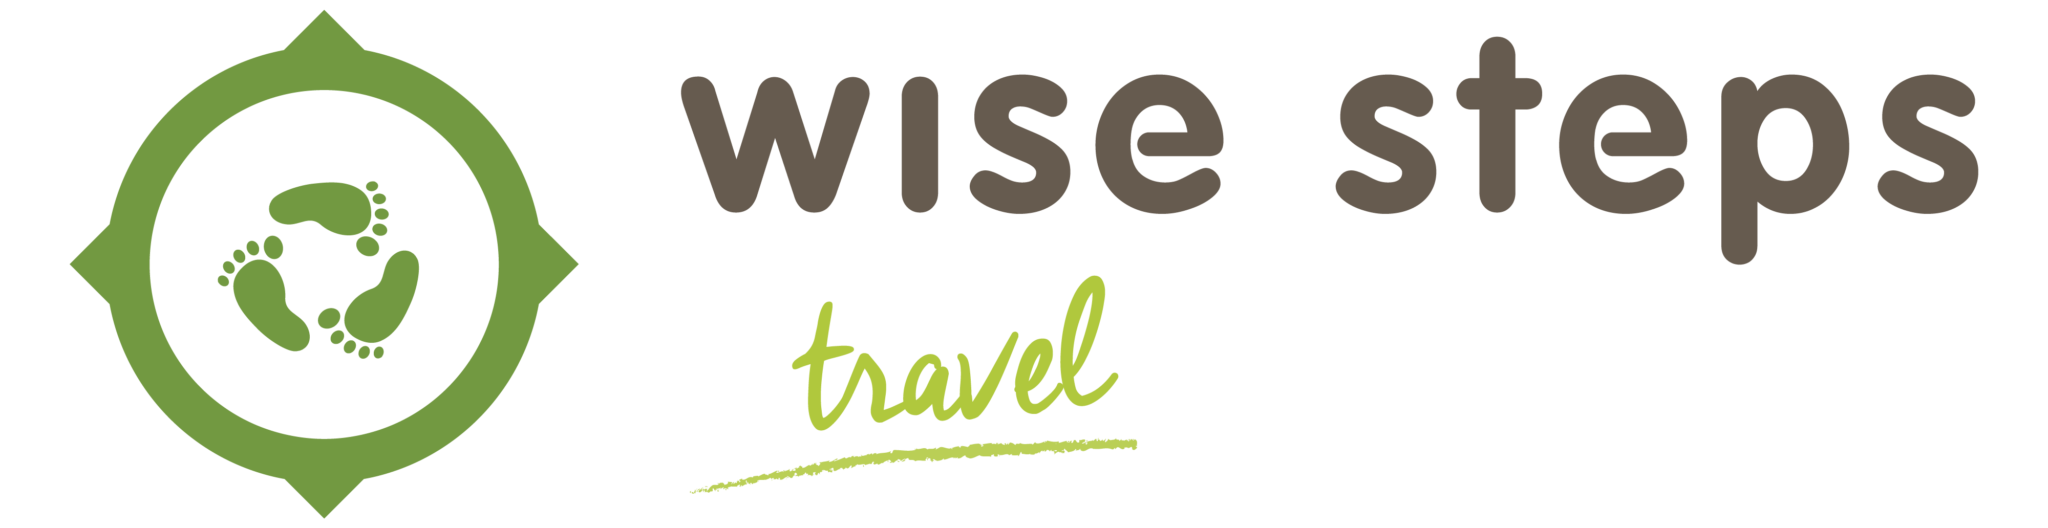 Logo Wise steps Travel